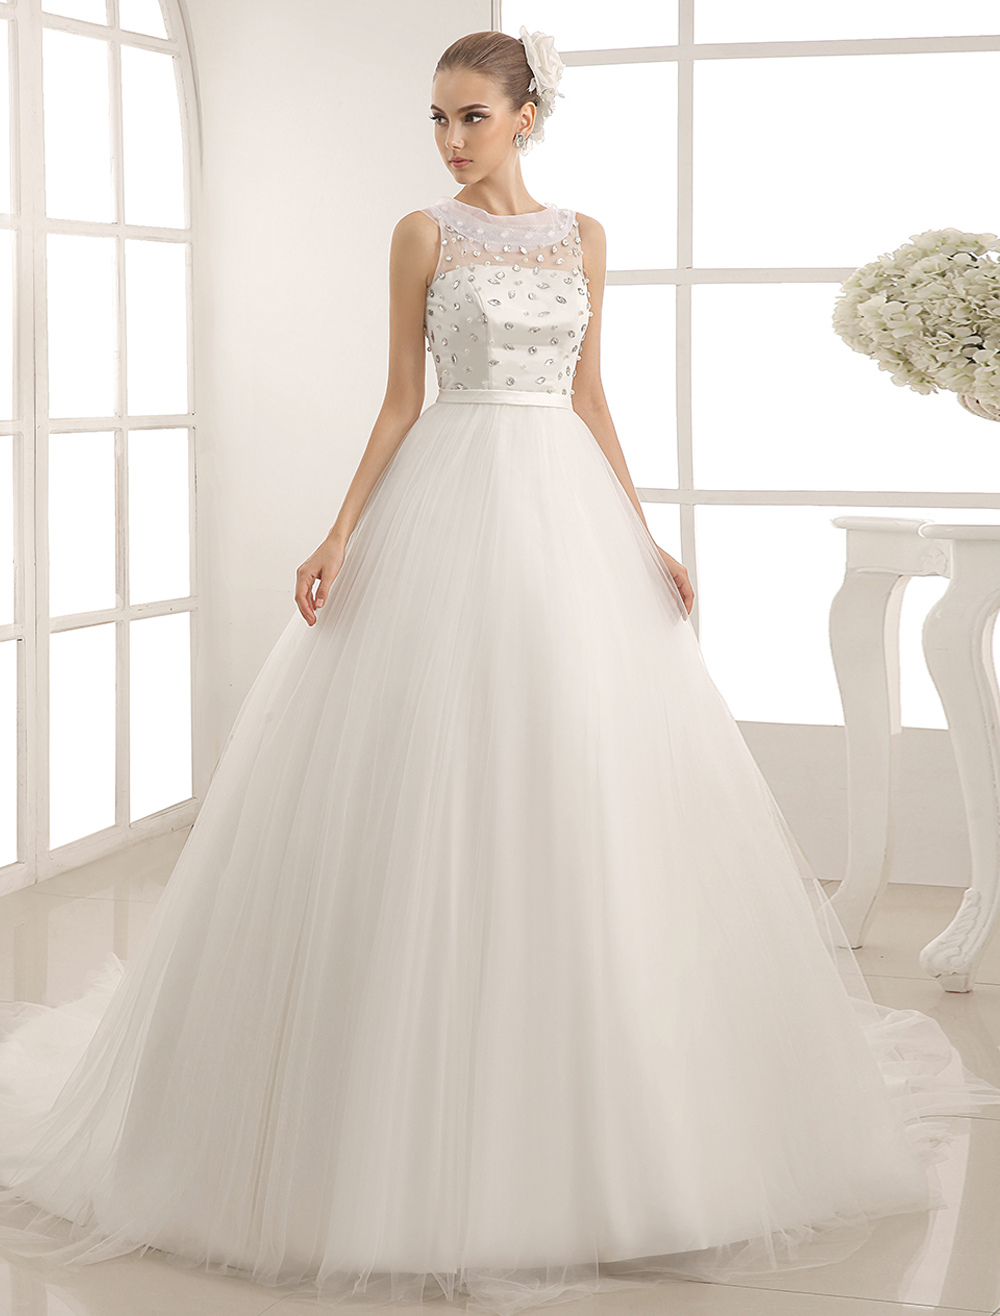 Jewel Neck Tulle Wedding Dress With Pearls Detailing - Milanoo.com